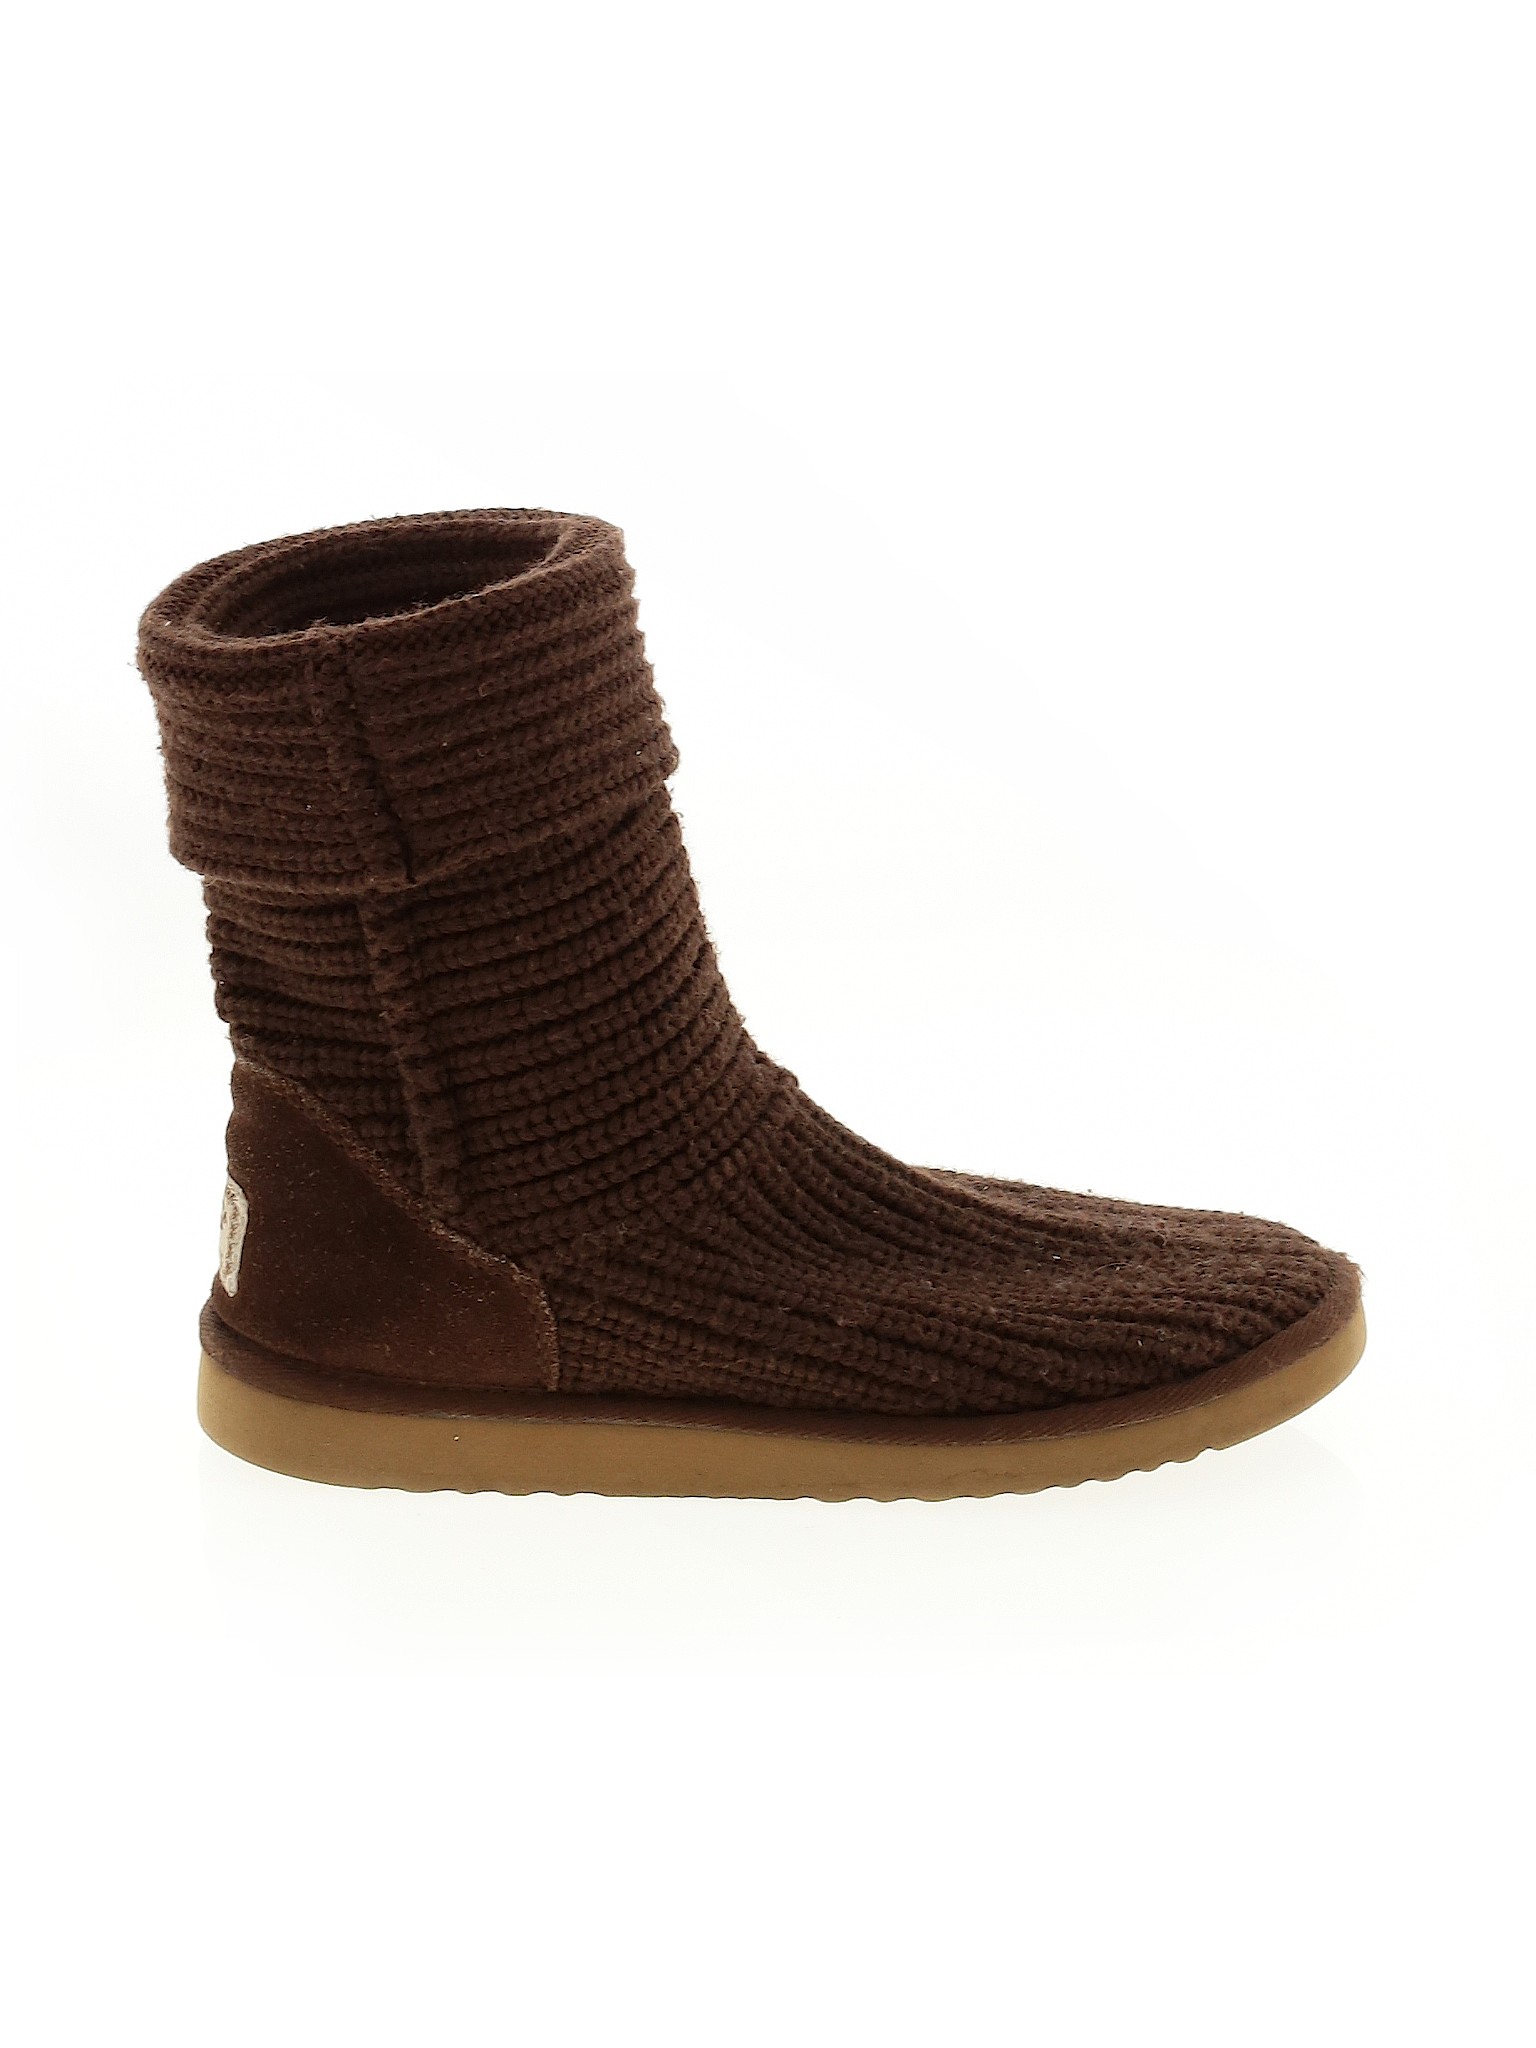 Ugg Australia Solid Brown Boots Size 8 - 72% off | thredUP